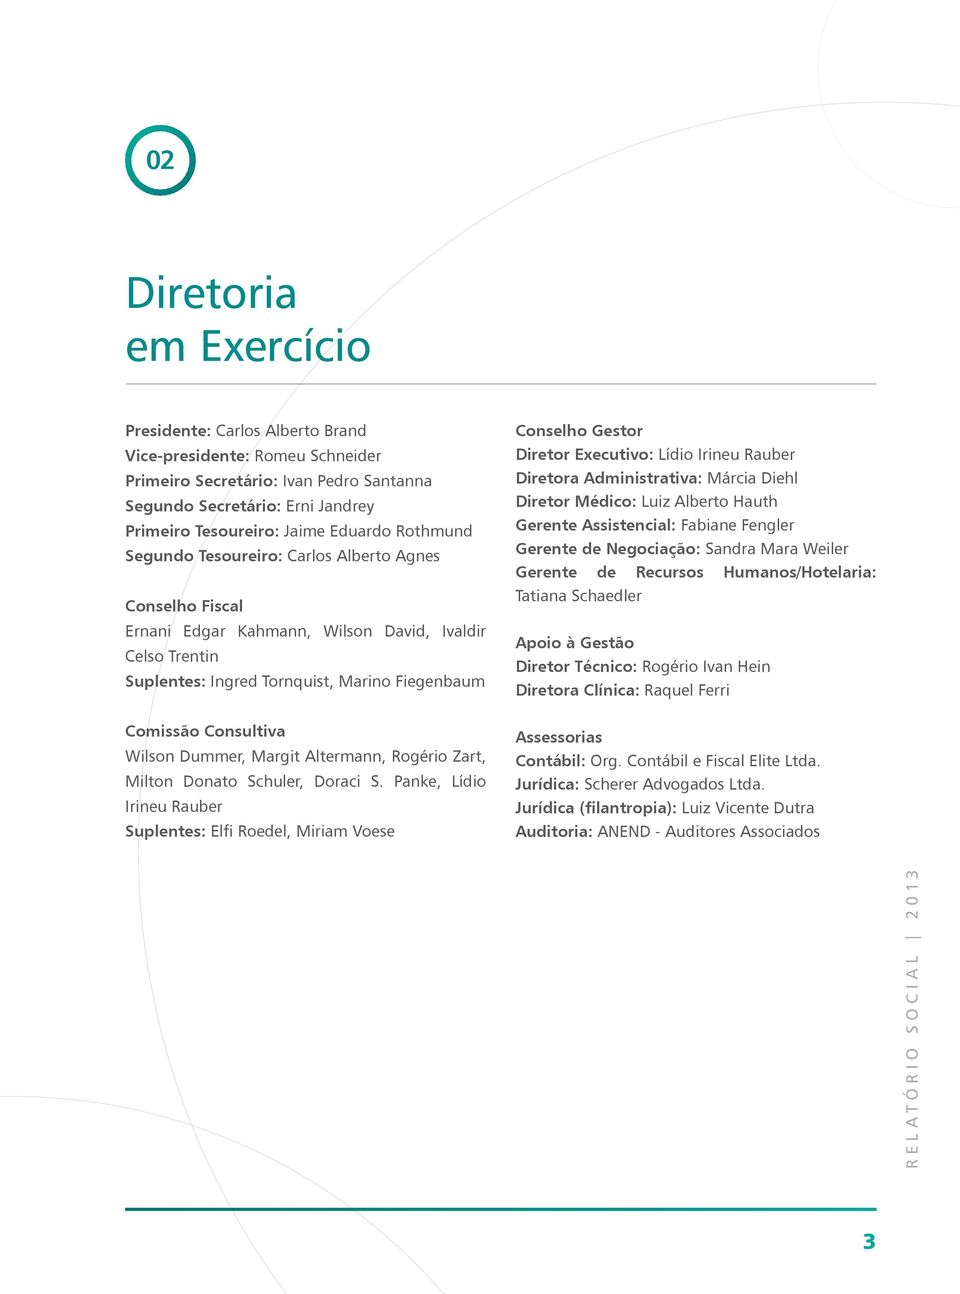 Wilson Dummer, Margit Altermann, Rogério Zart, Milton Donato Schuler, Doraci S.